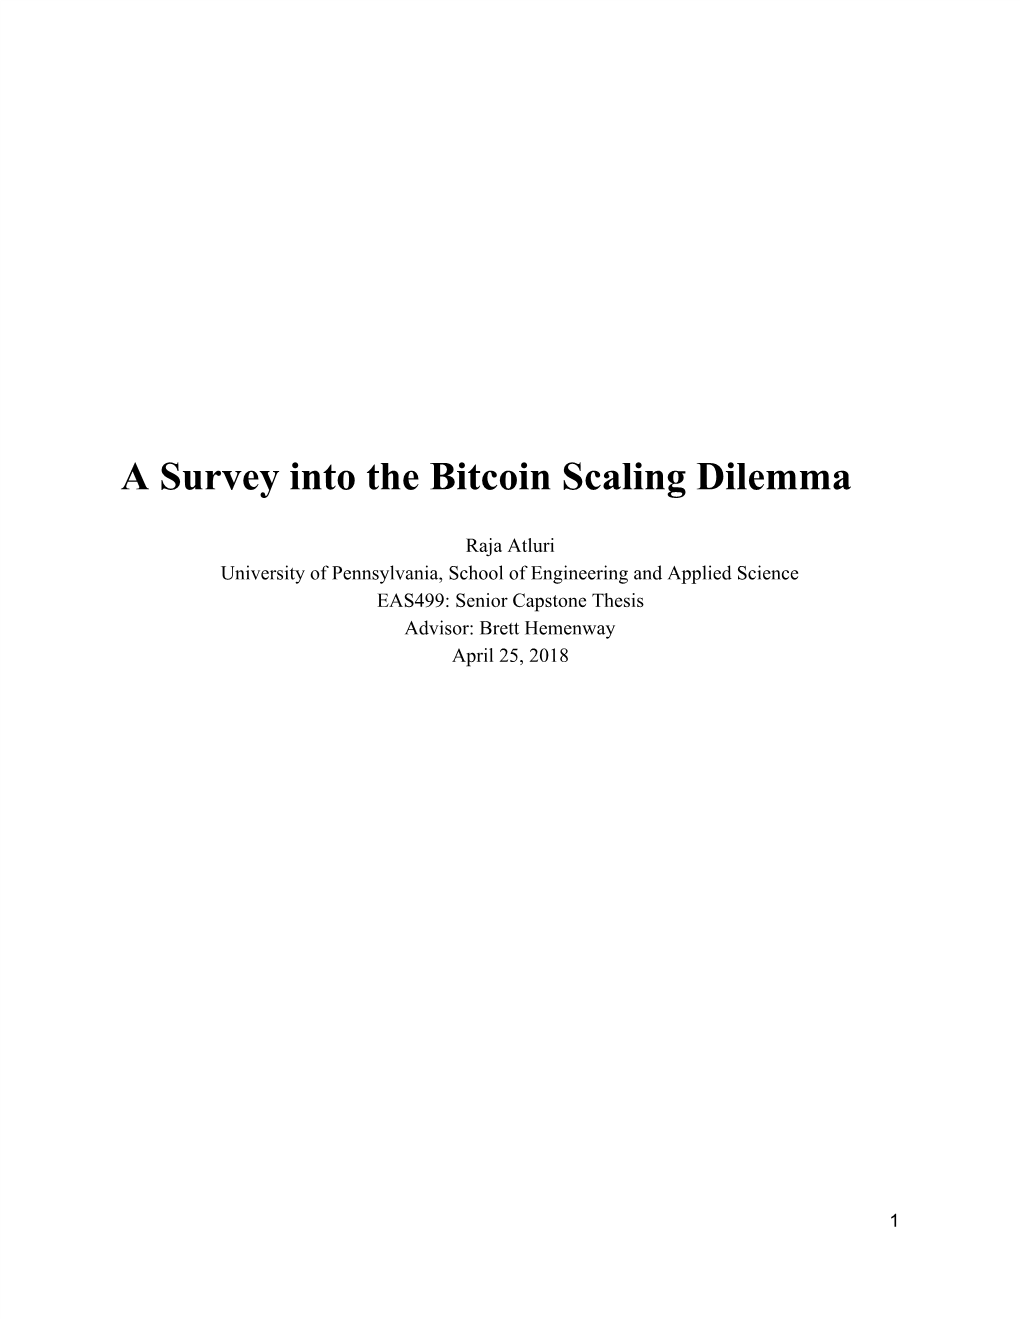 A Survey Into the Bitcoin Scaling Dilemma